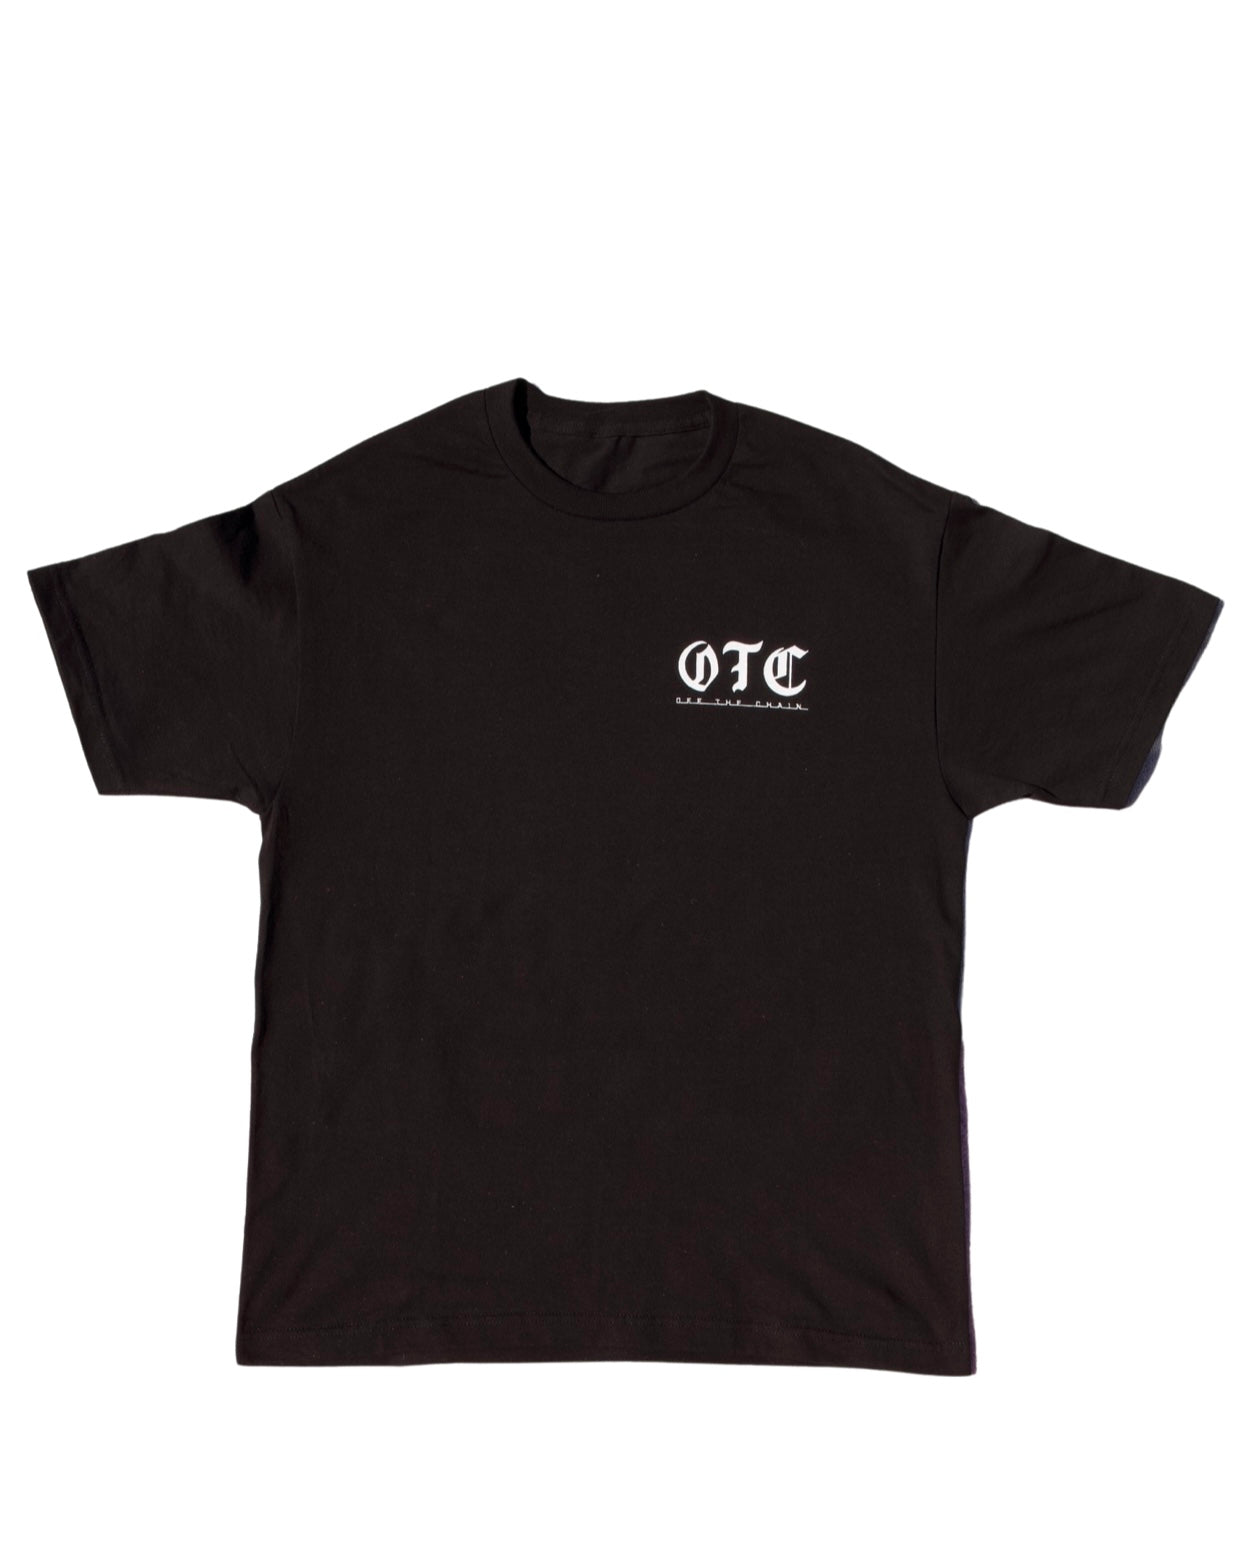 OTC Black T